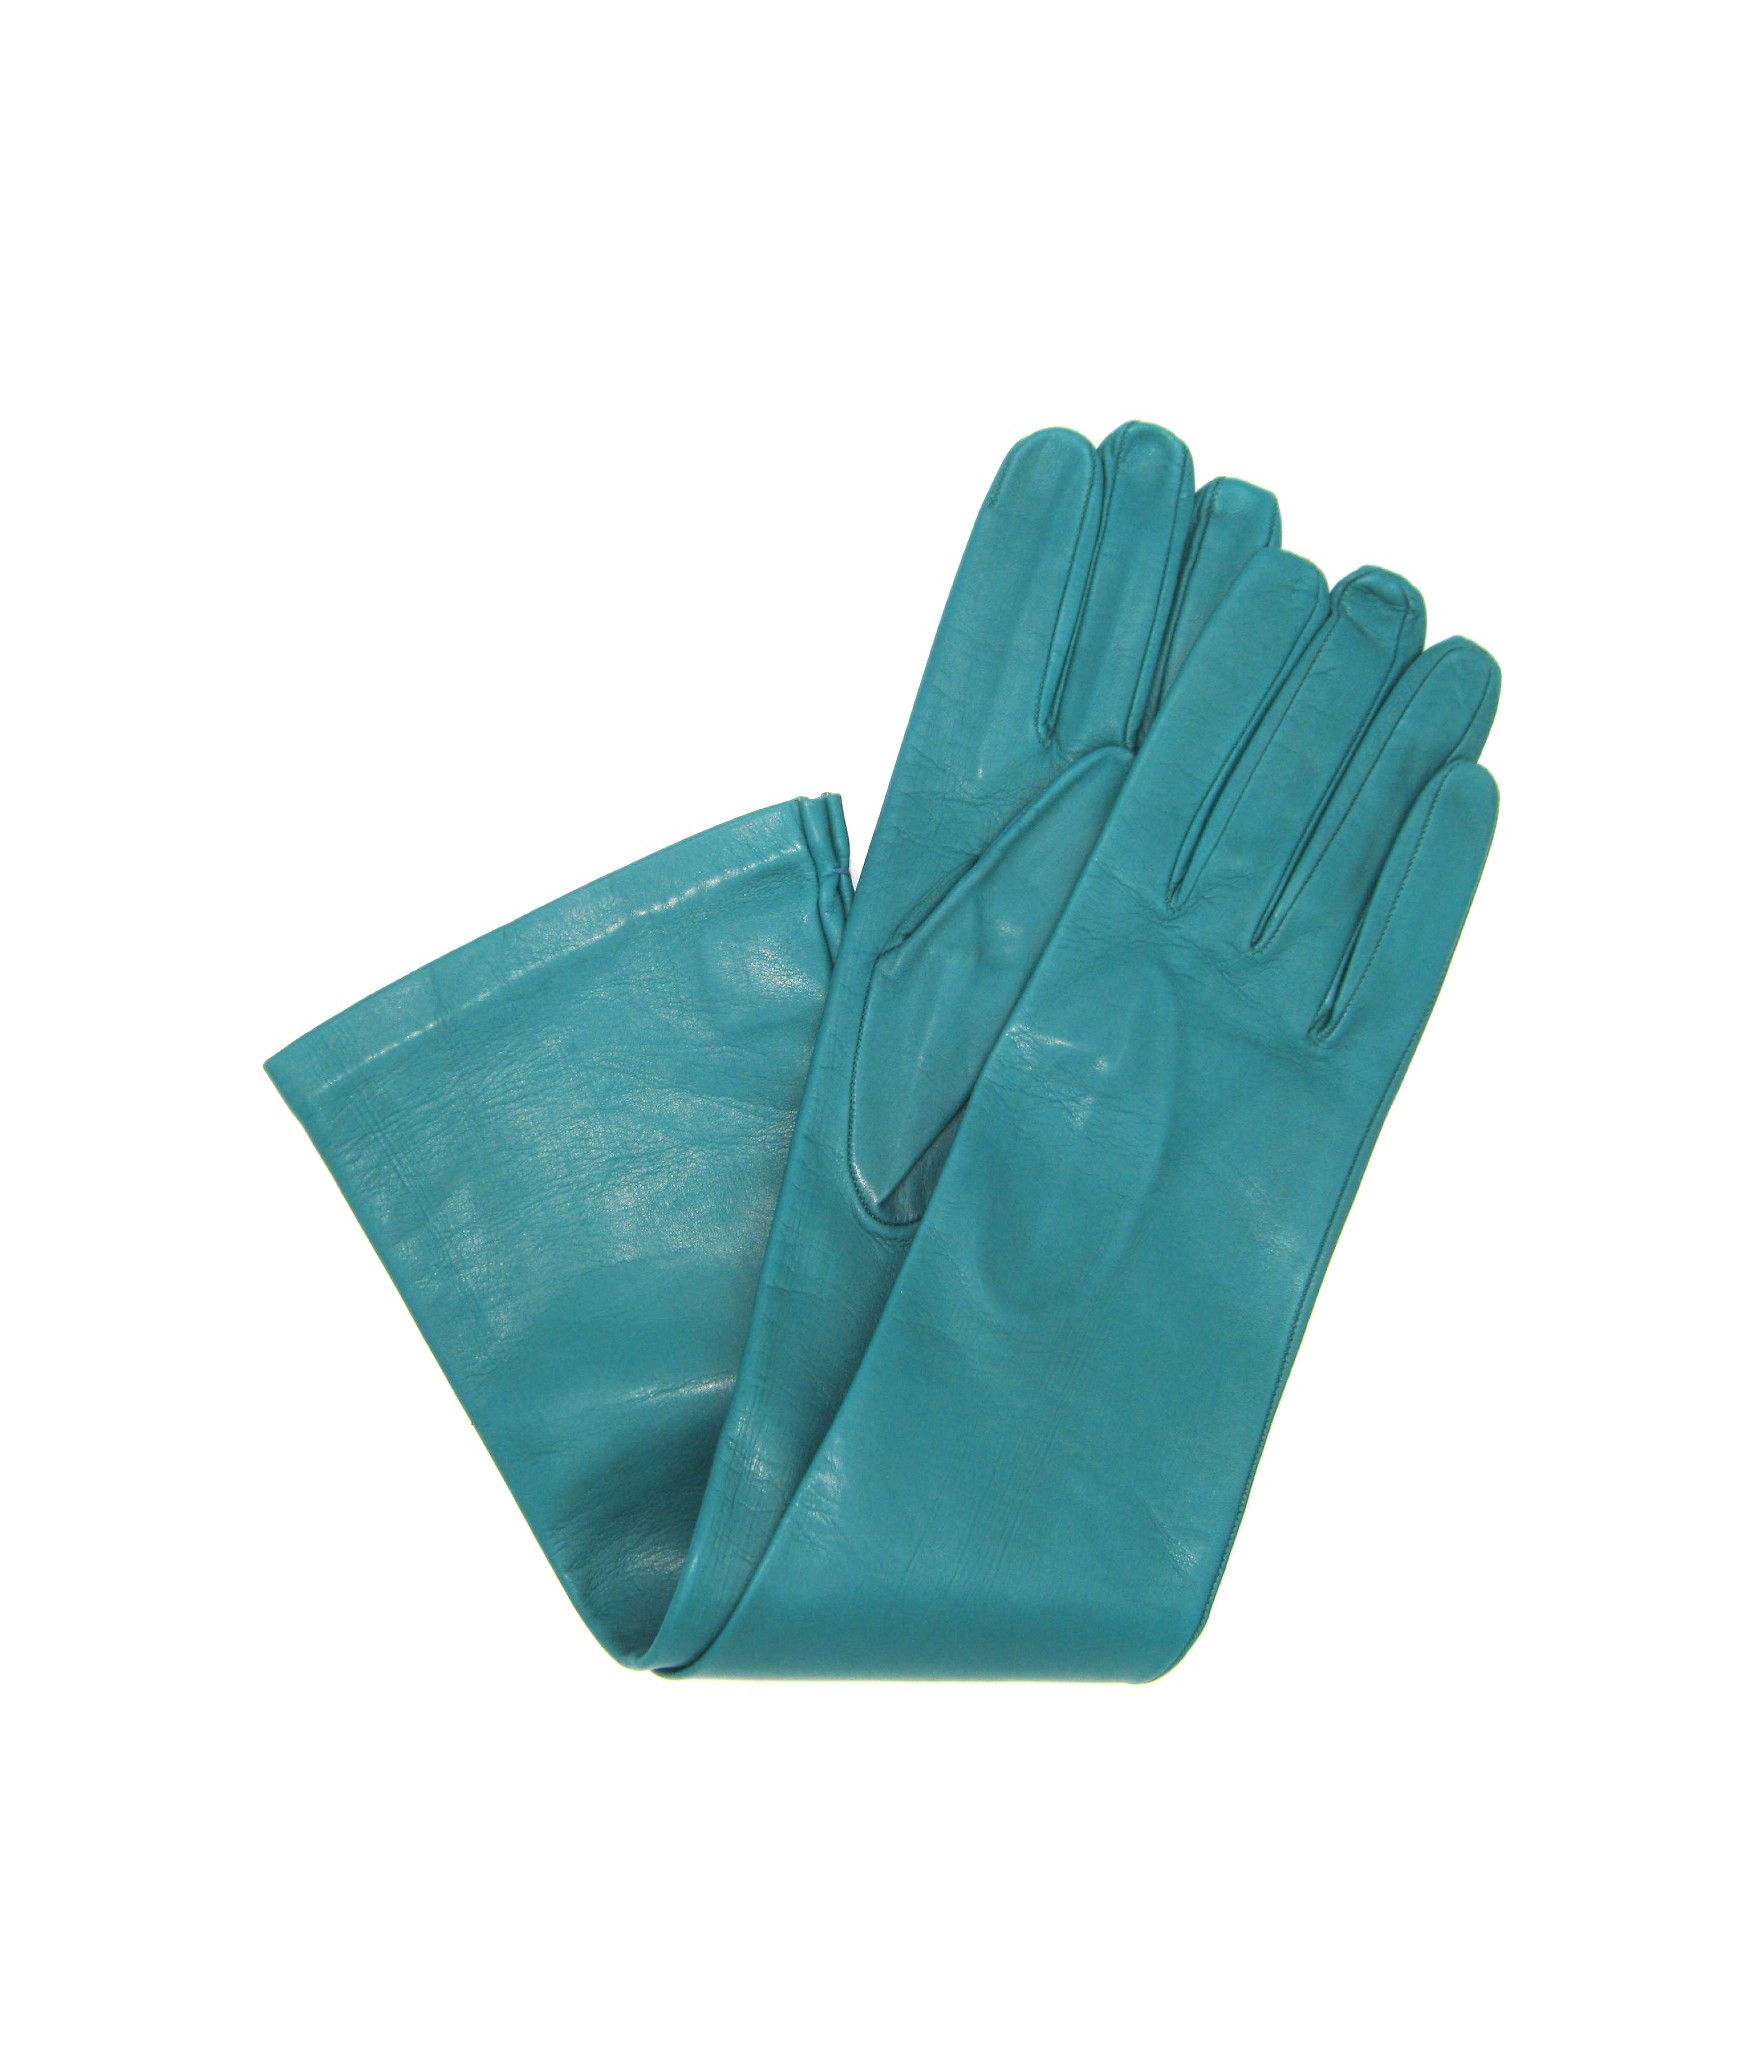 Nappa leather gloves 10bt silk lined Petrolium